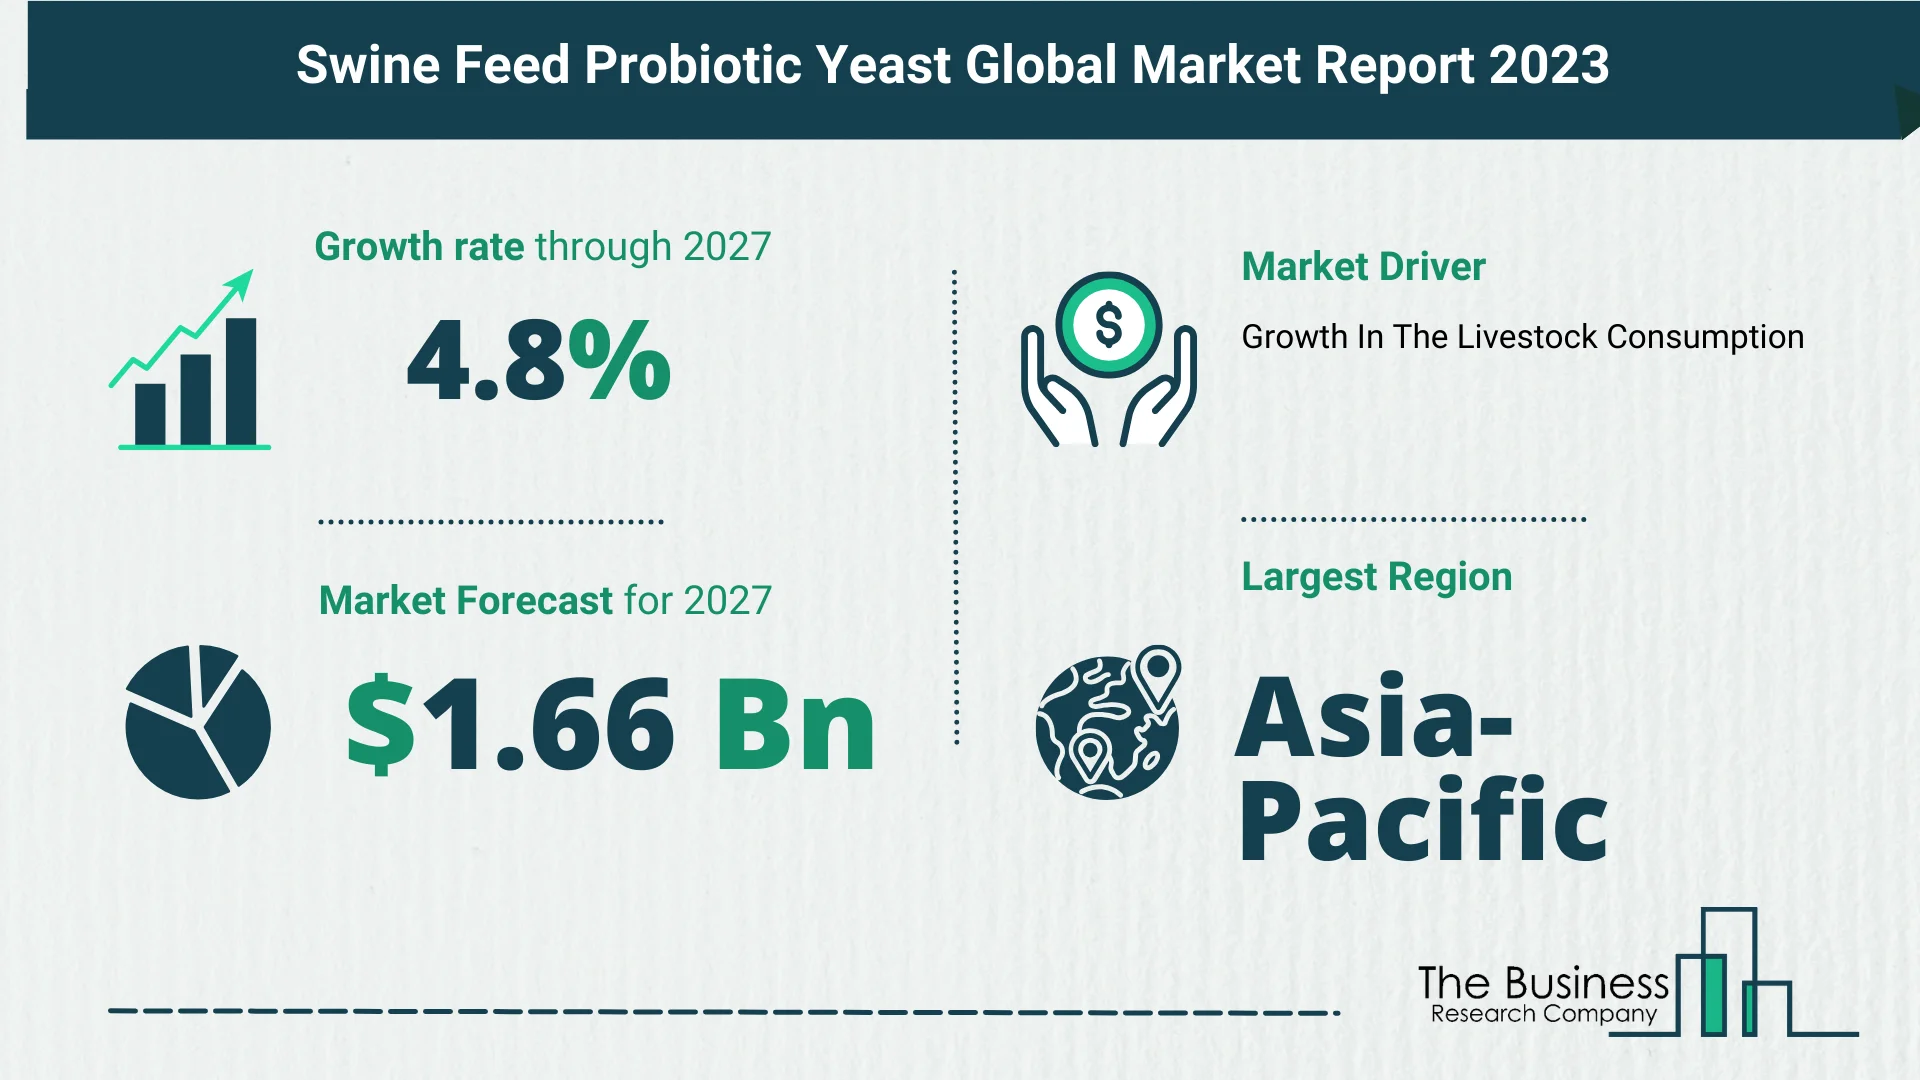 Global Swine Feed Probiotic Yeast Market